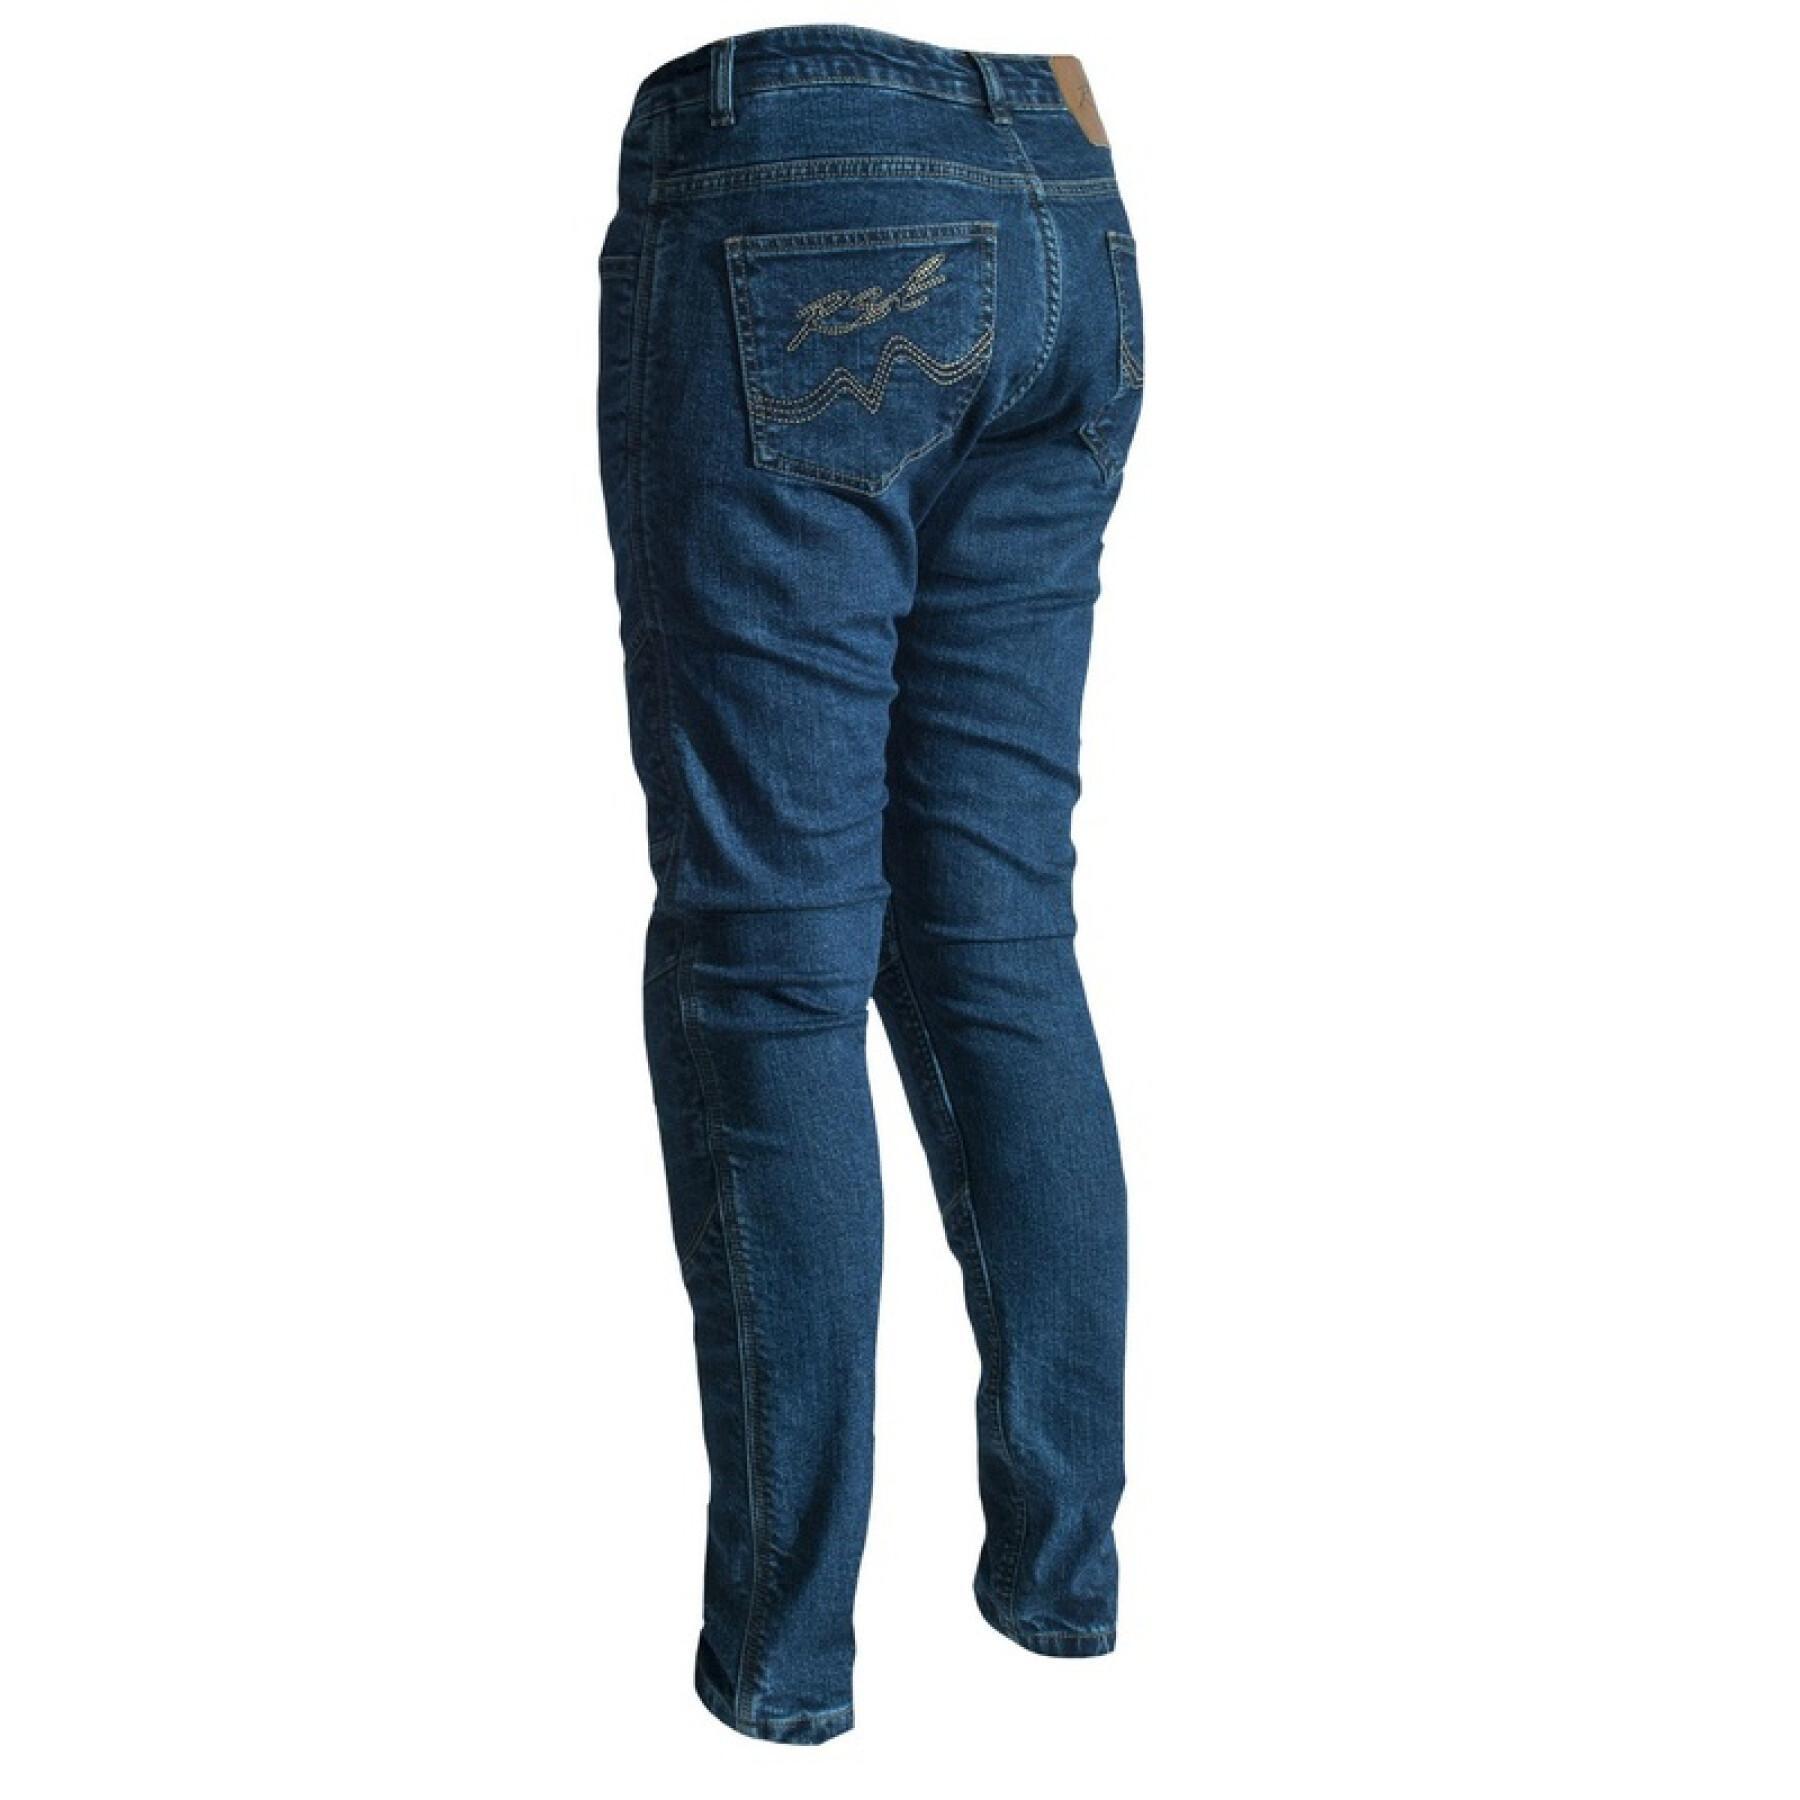 Pantalones vaqueros para mujer RST x Kevlar® Aramid Tech Pro